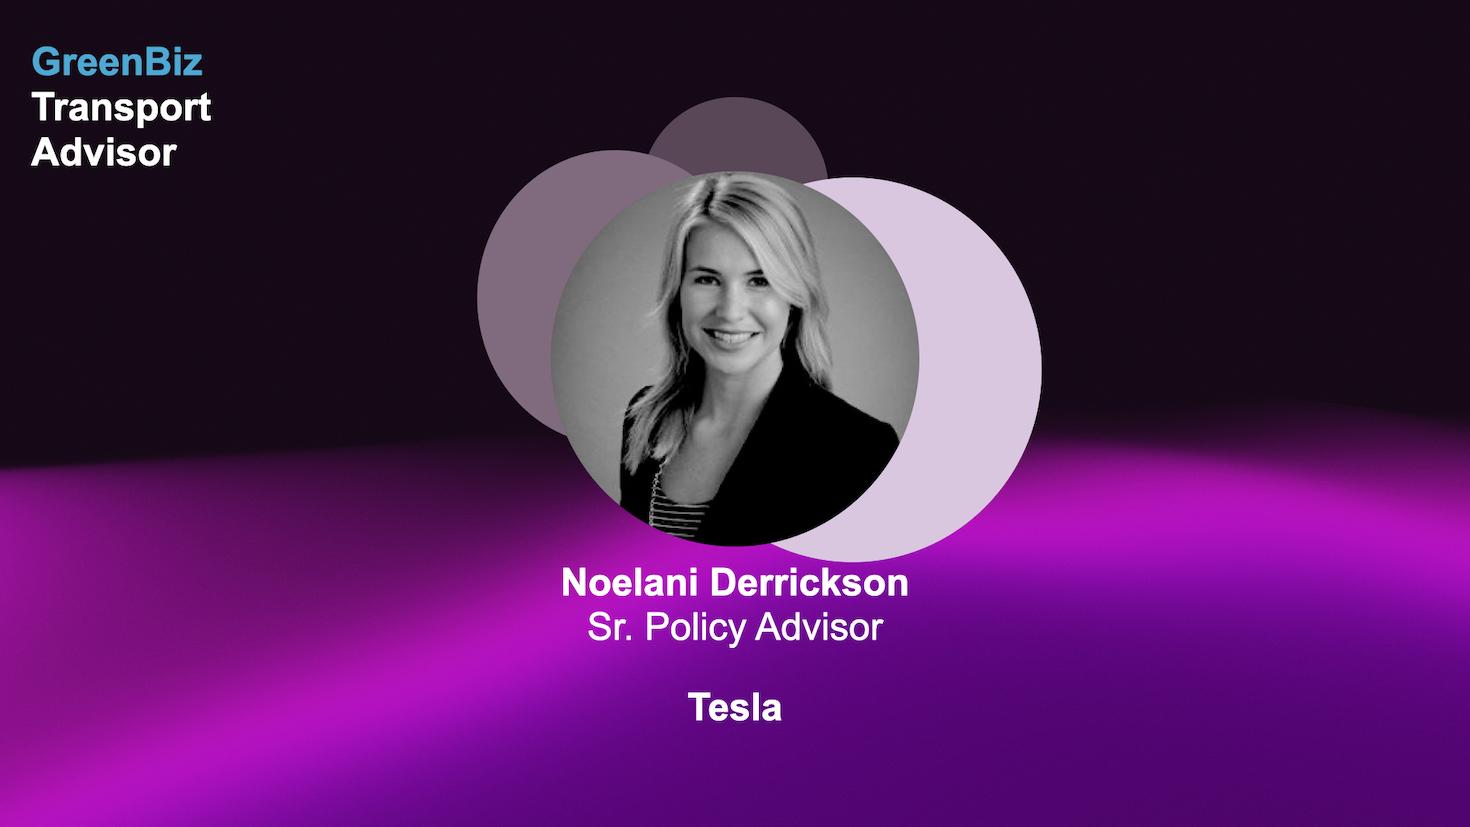 Noelani Derrickson of Tesla